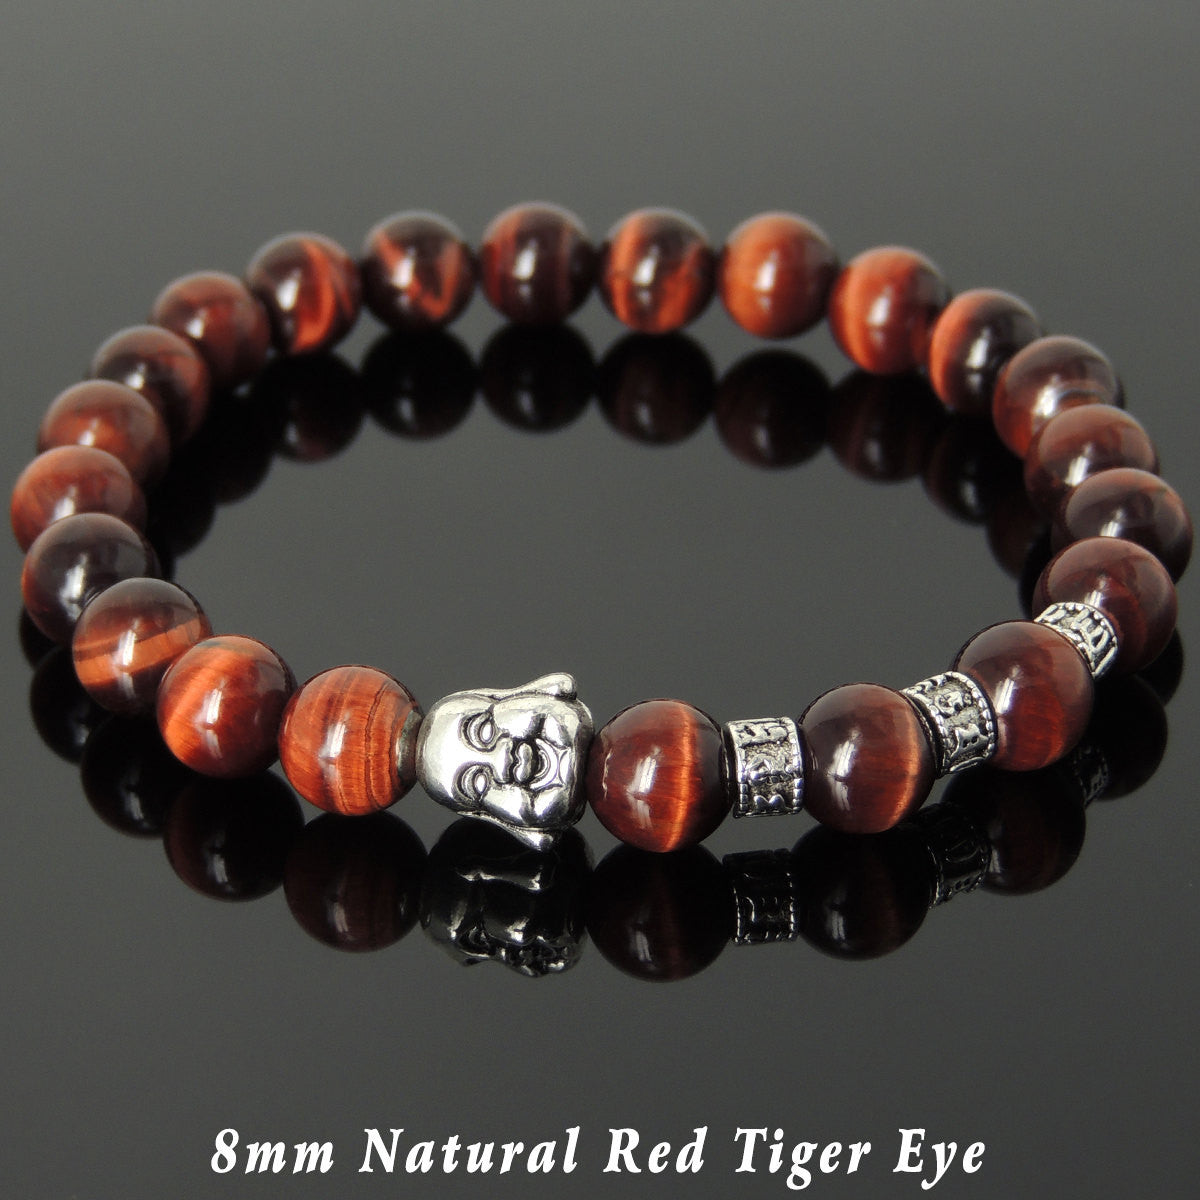 Red Tiger Eye Healing Gemstone Bracelet with Tibetan Silver Happy Buddha & OM Meditation Spacer Beads - Handmade by Gem & Silver TSB338